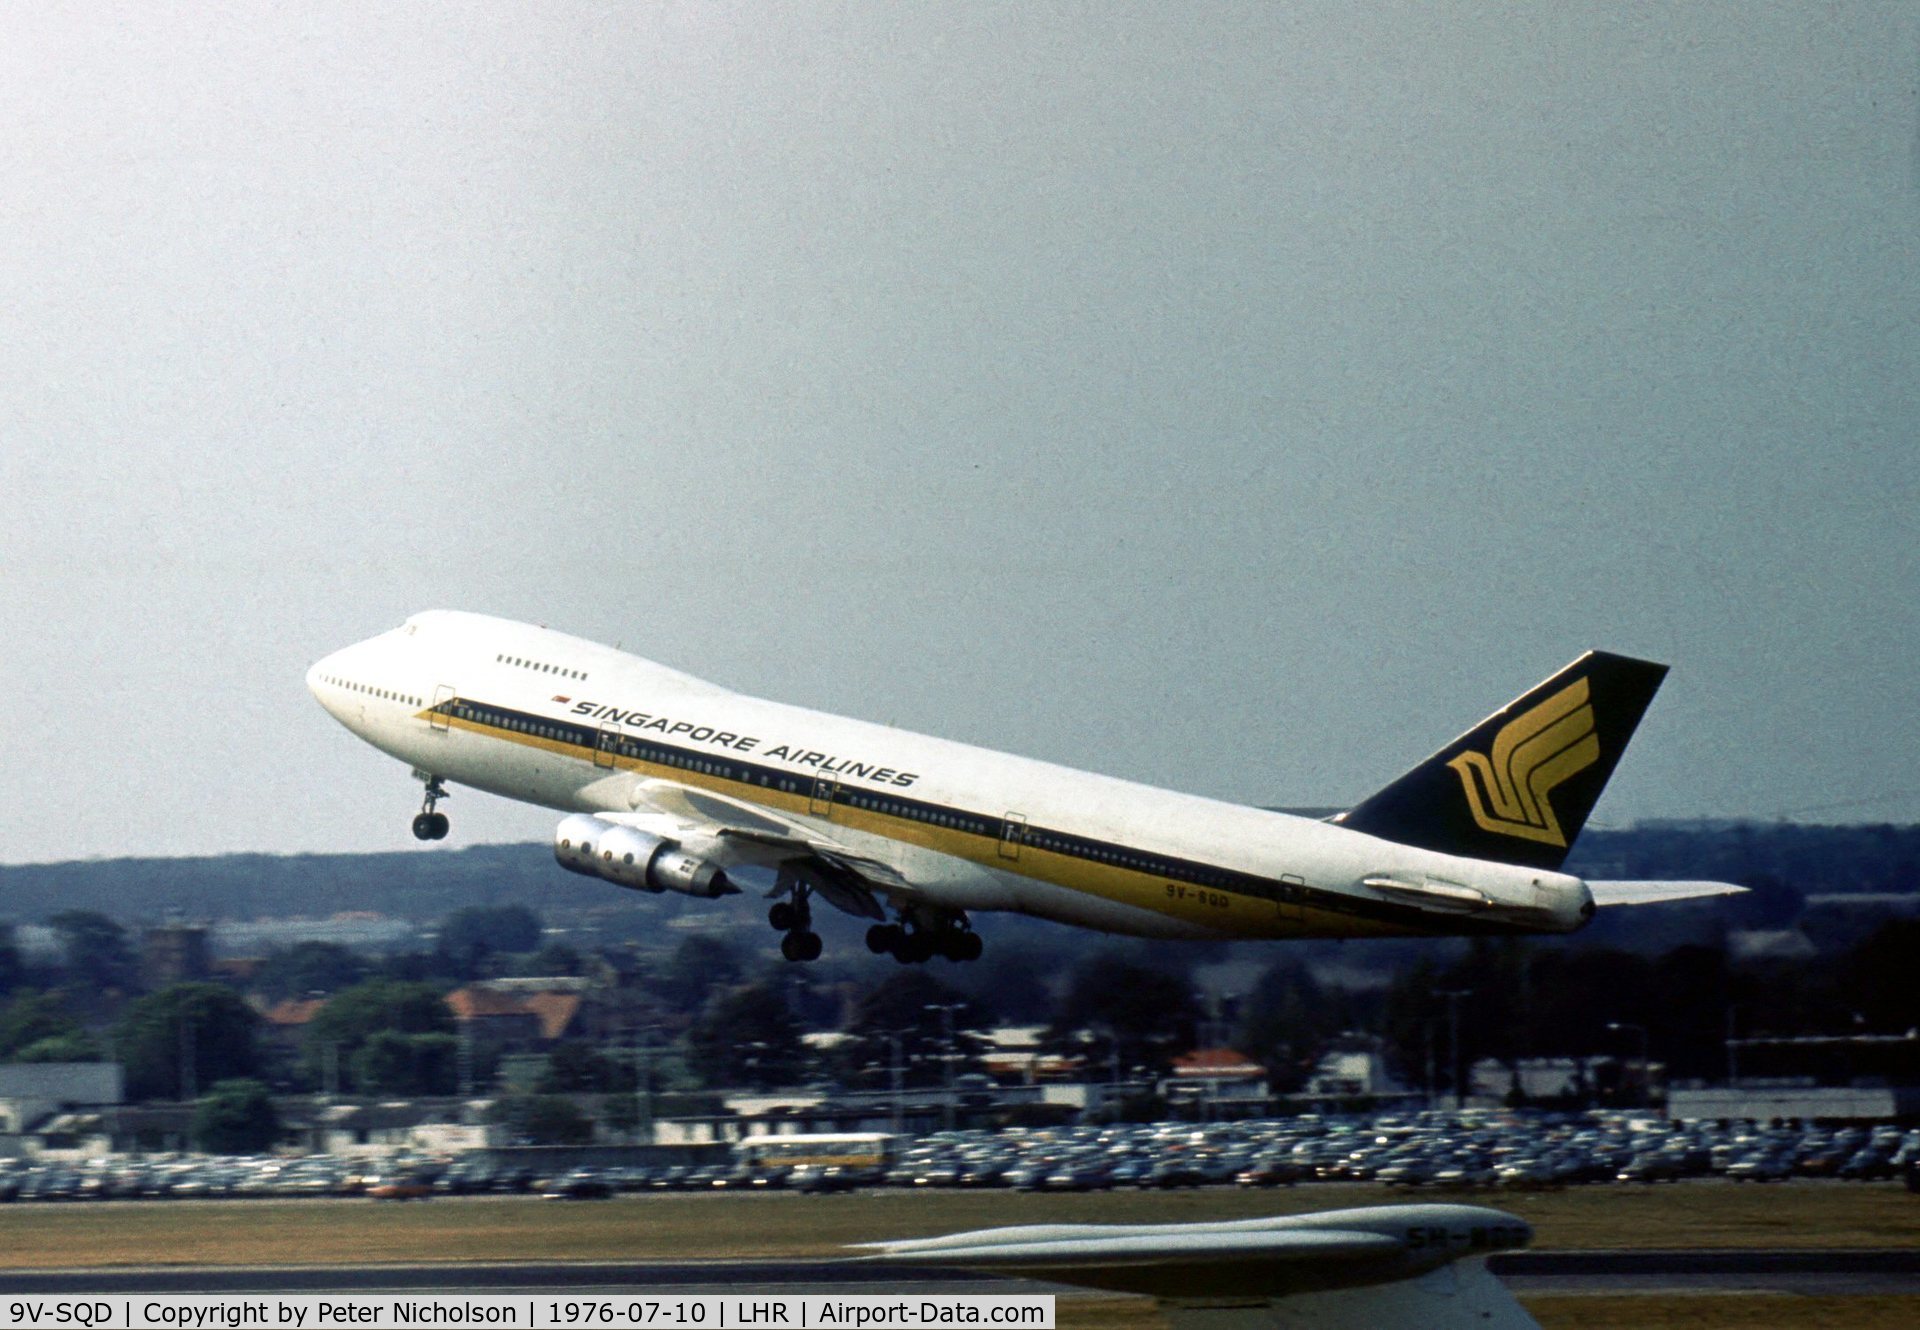 9V-SQD, 1975 Boeing 747-212B C/N 21048, Boeing 747-212B of Singapore Airlines departing London Heathrow in the Summer of 1976.